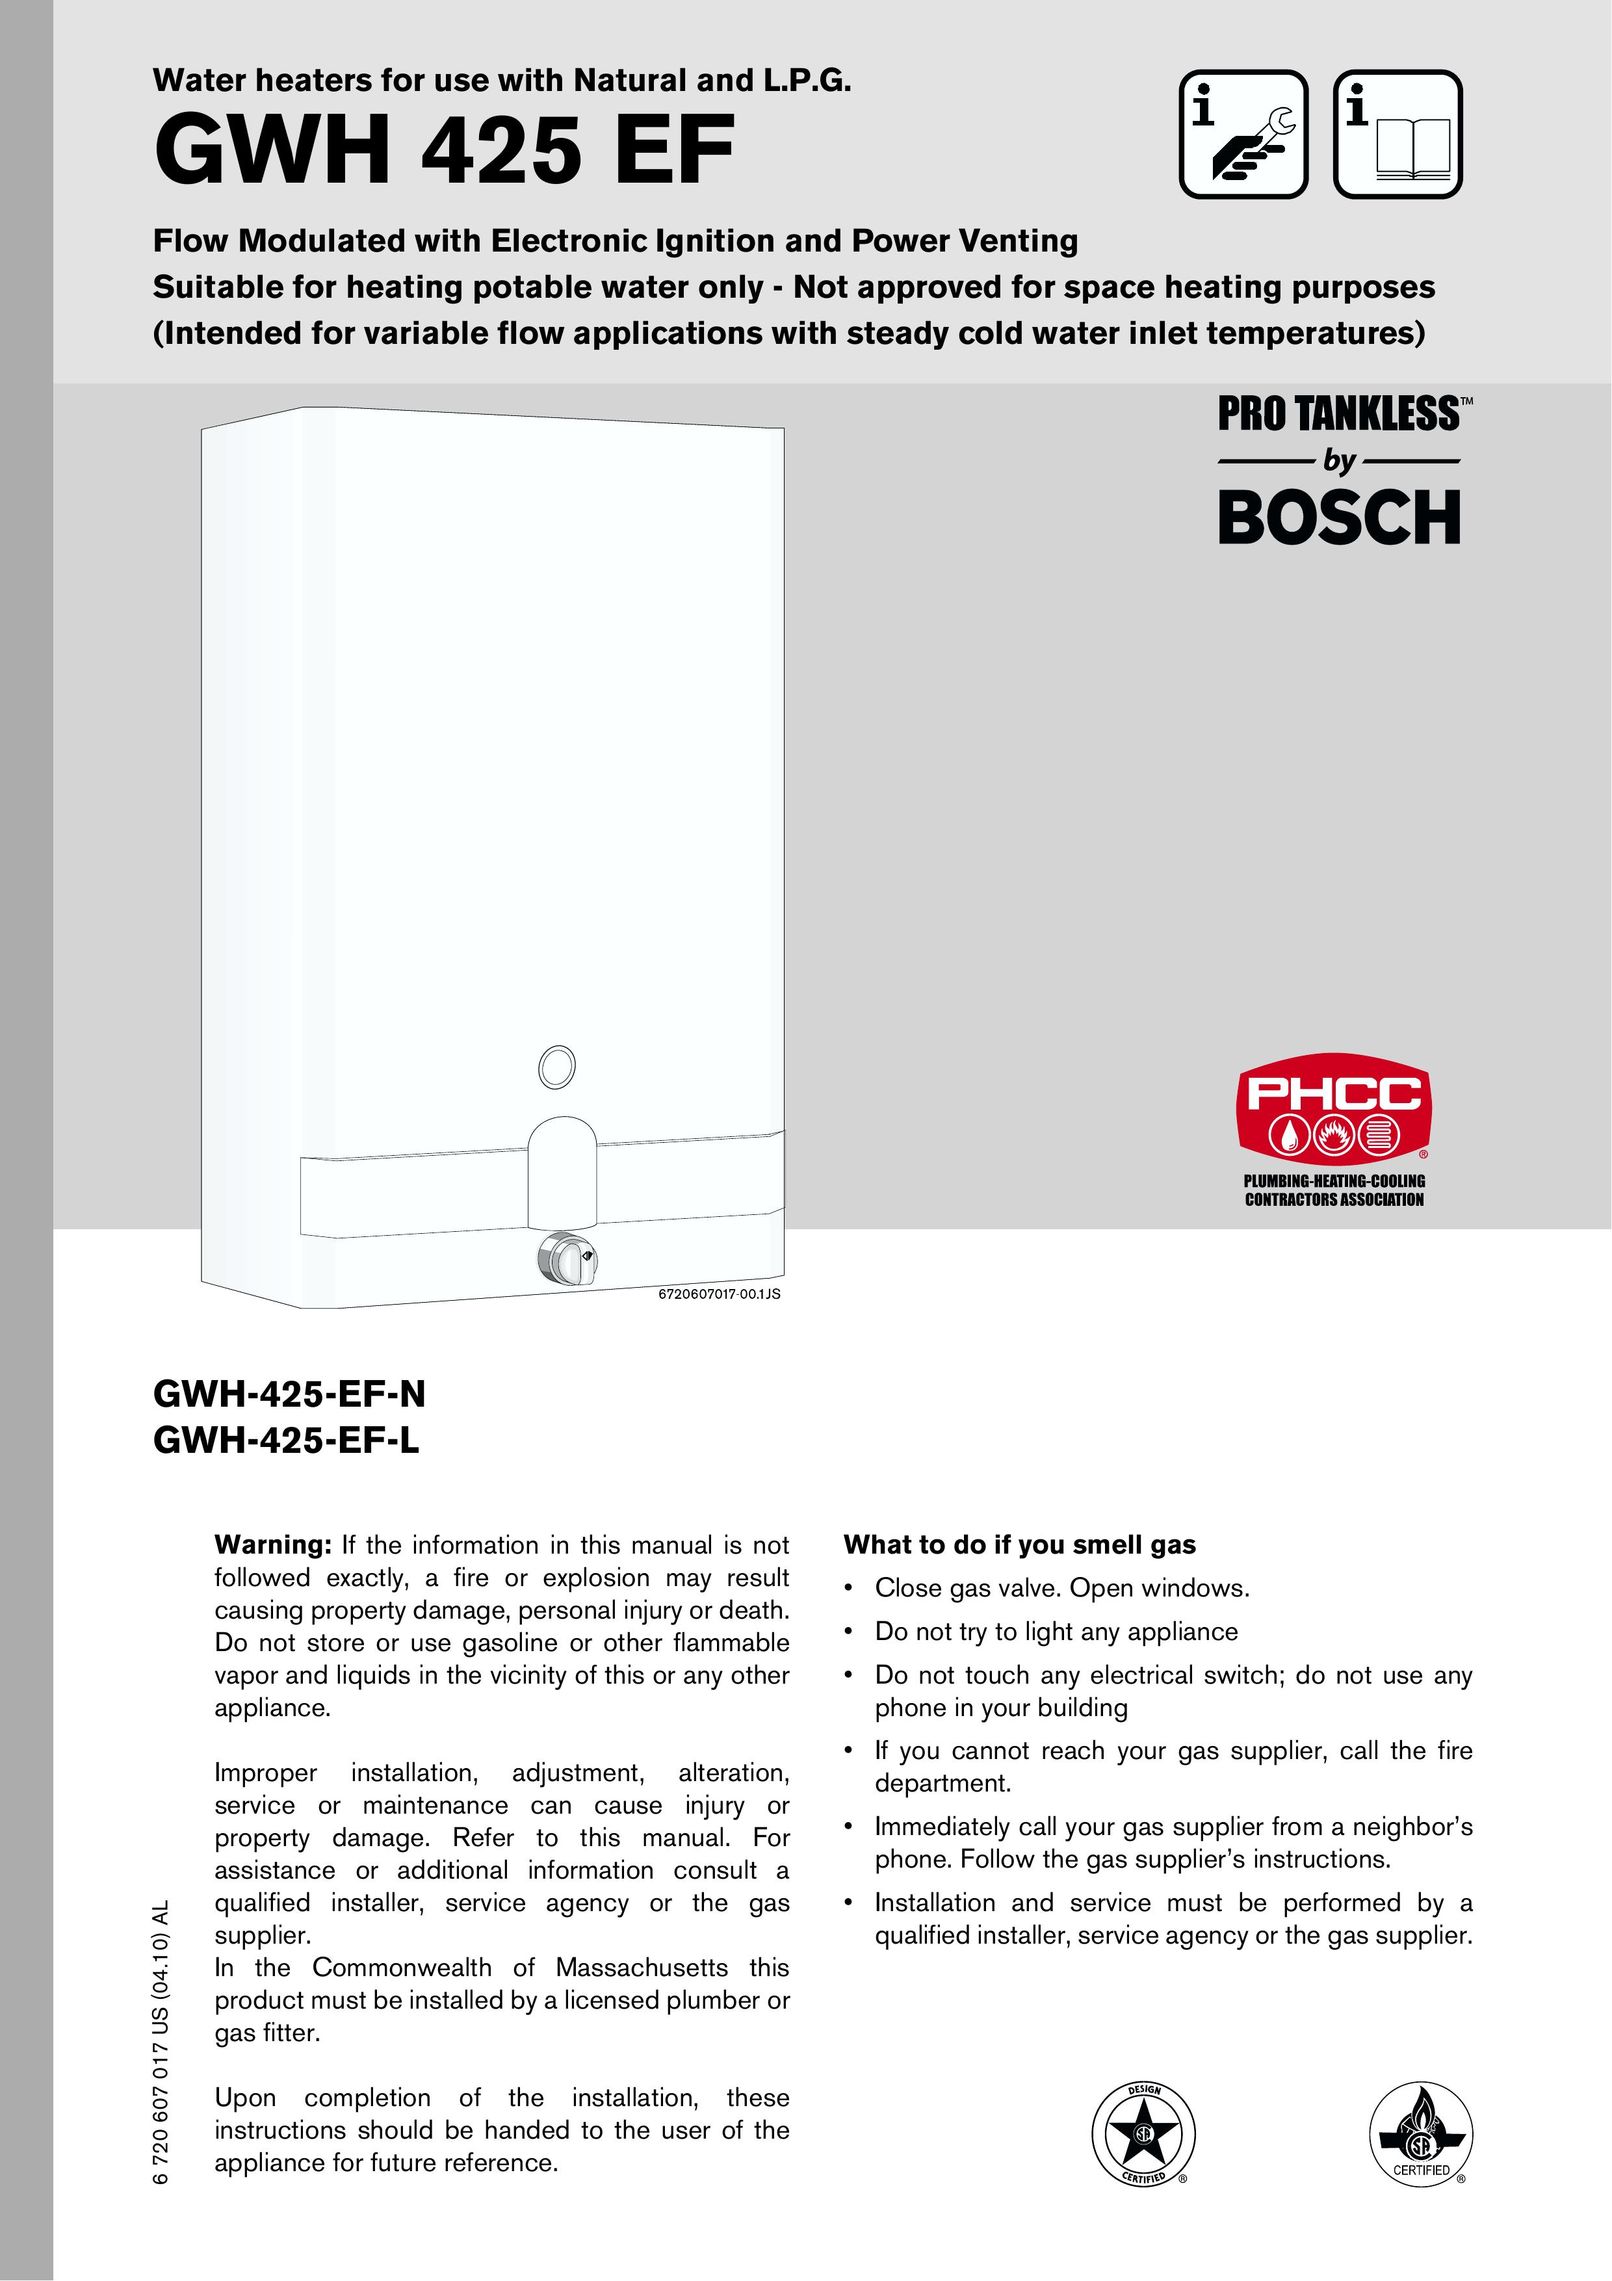 American Dryer Corp. GWH 425 EF Water Heater User Manual